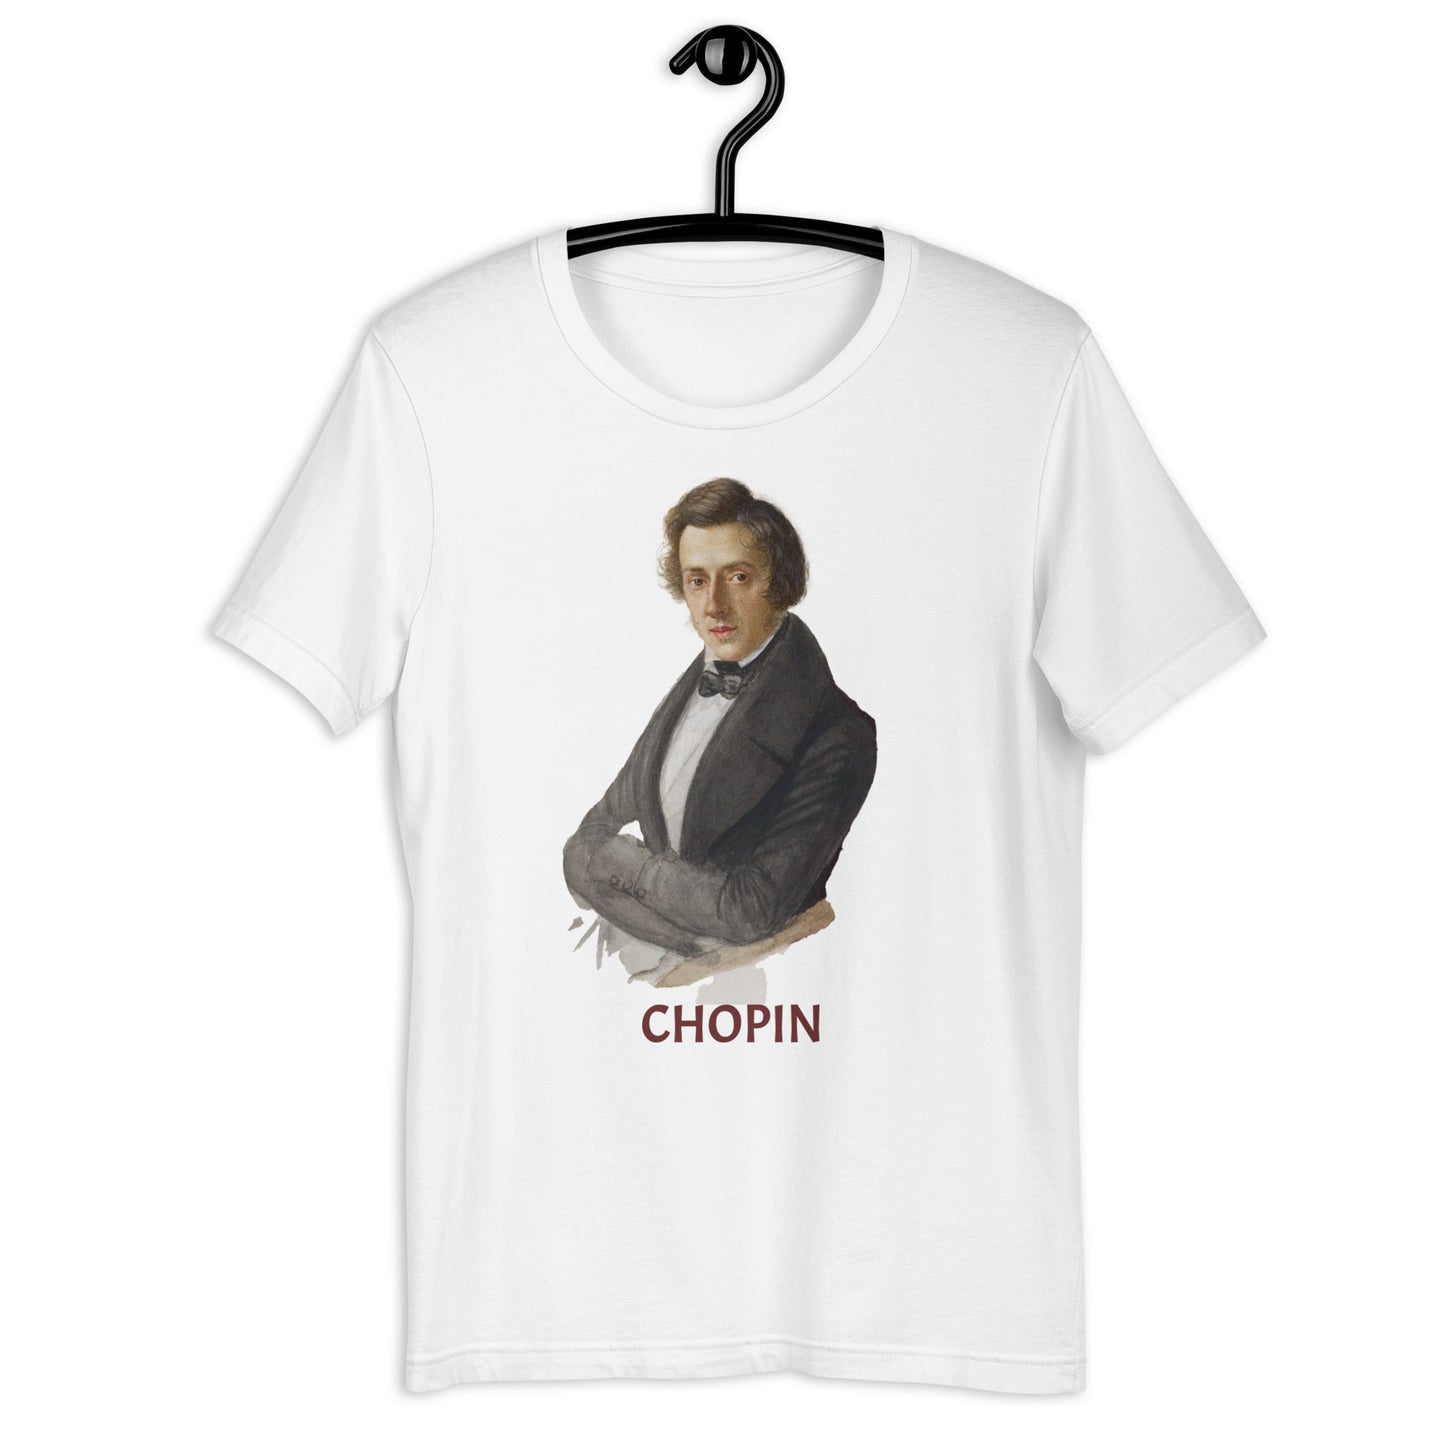 Chopin unisex t-shirt